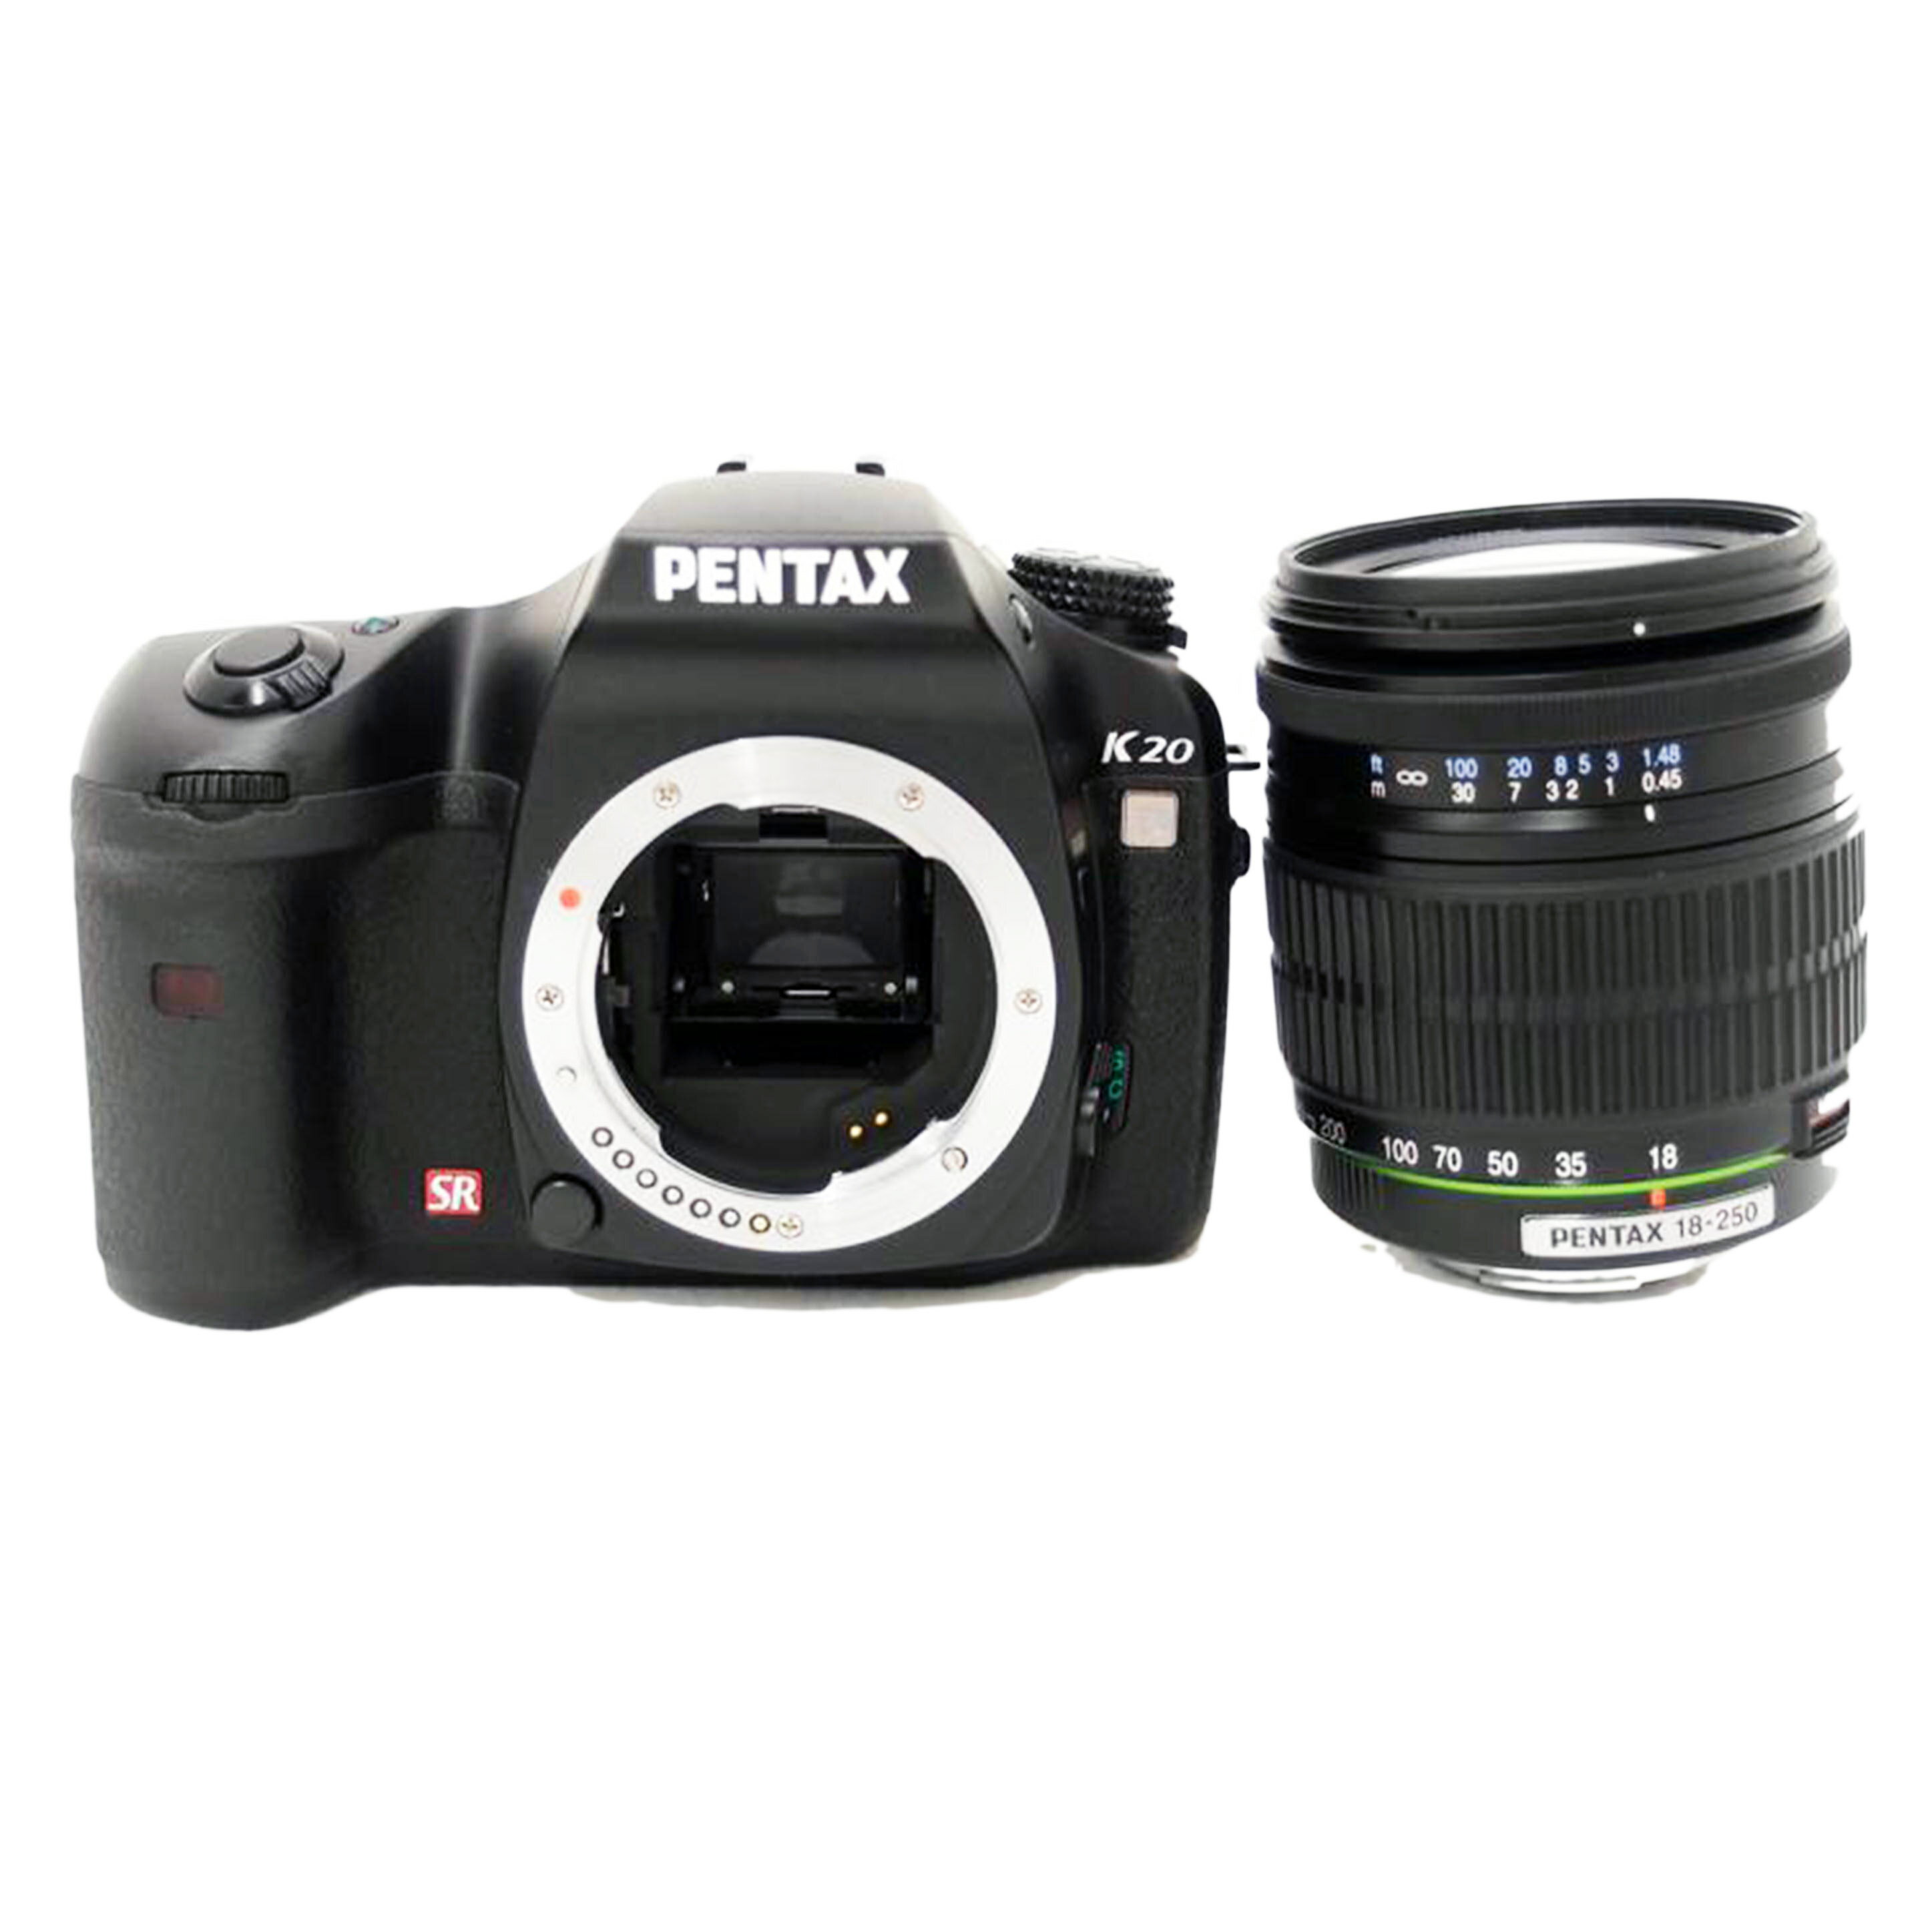 PENTAX ペンタックス/デジタル一眼レンズキット/K20D DA18-250/2906460/Aランク/69【中古】